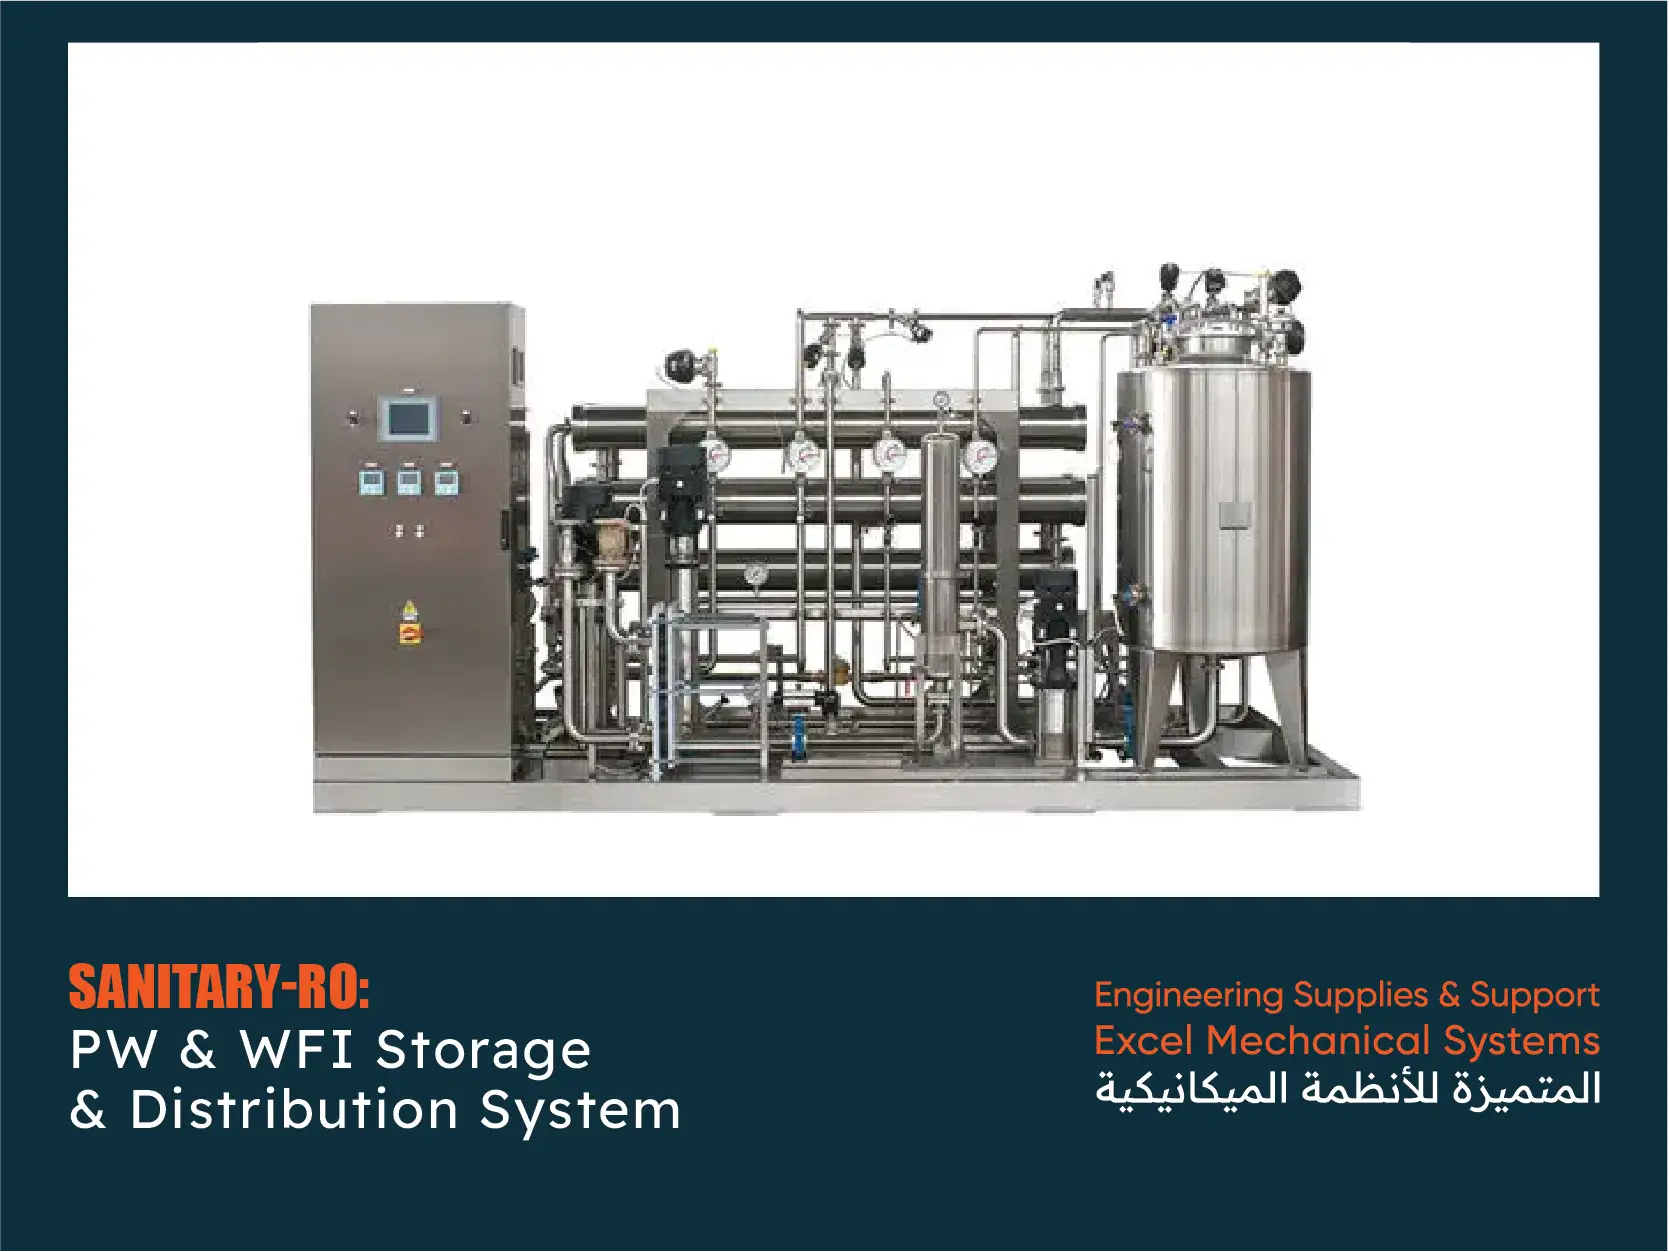 Sanitary-RO-PW & WFI Storage & Distribution System-08-08